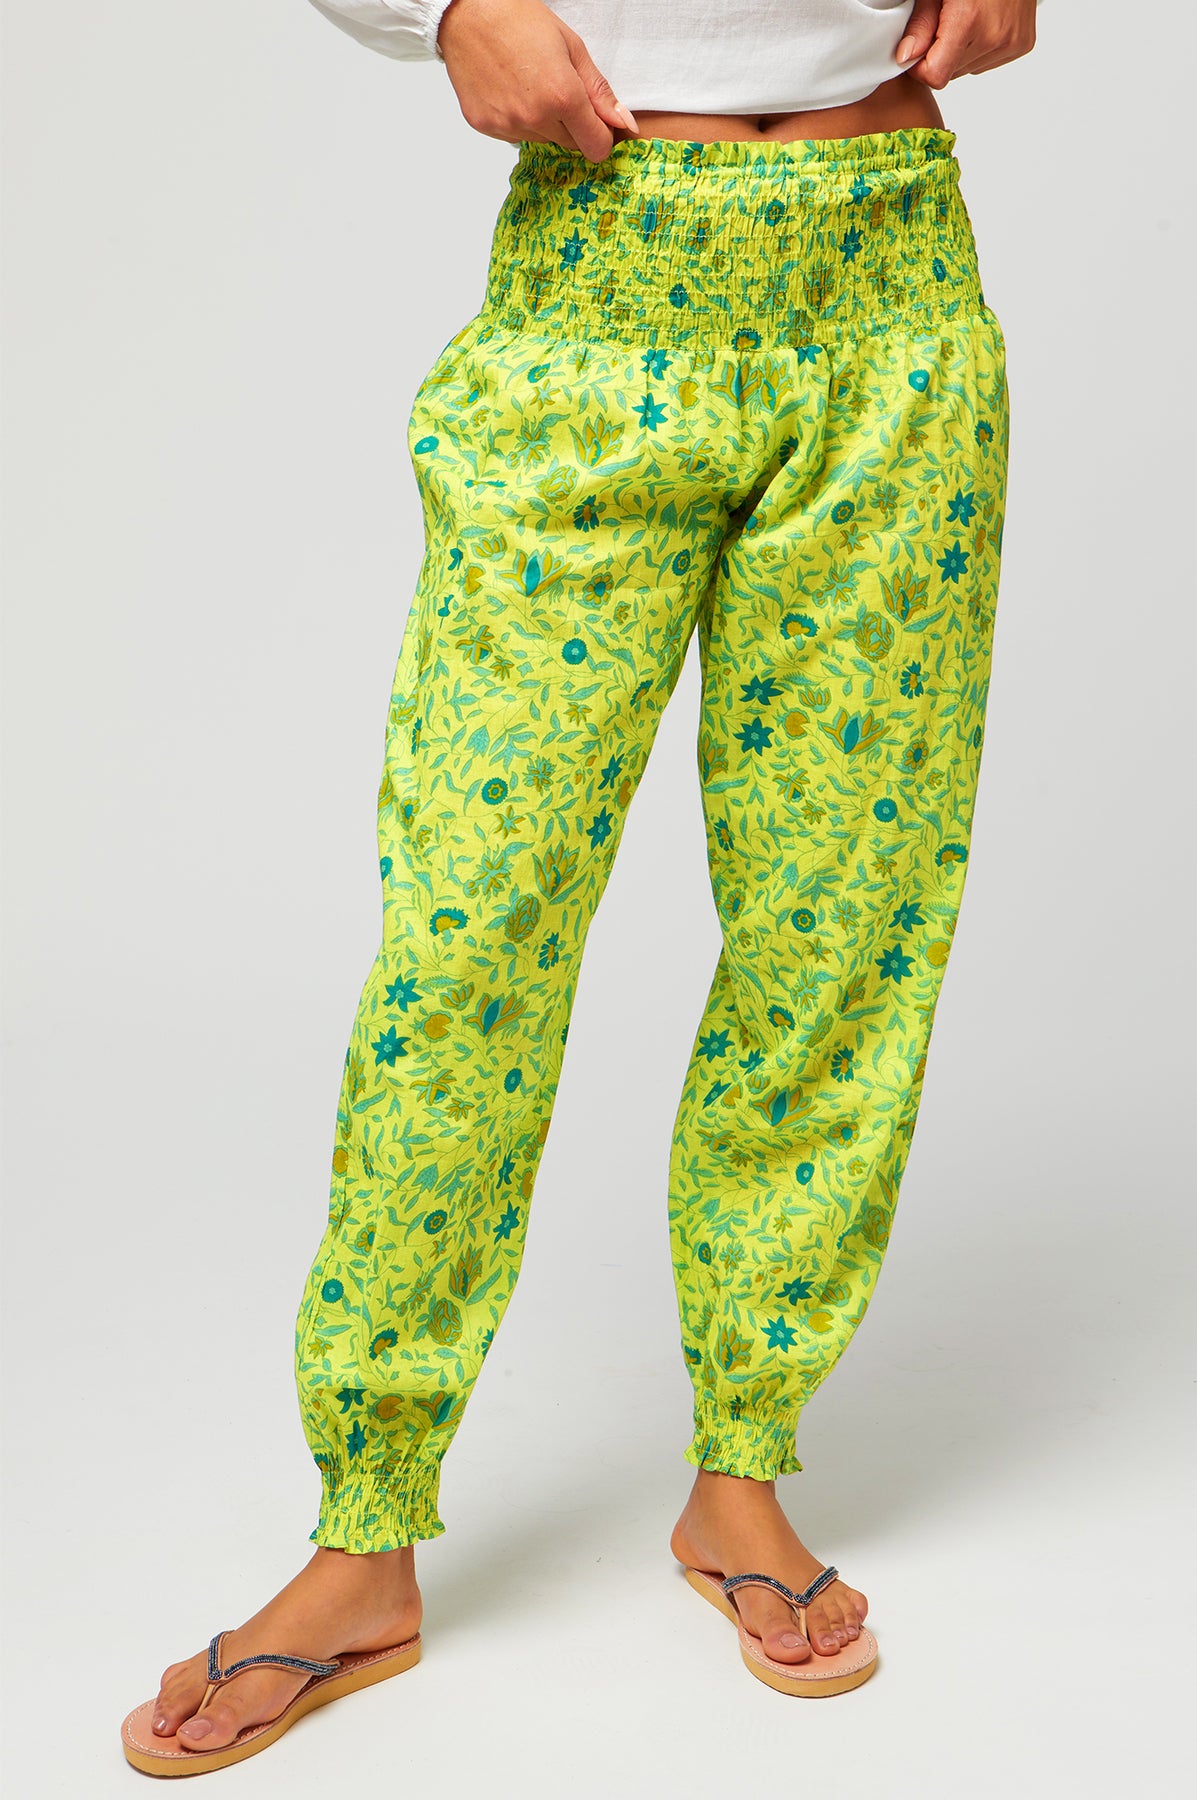 Green Harem pants - Ayaany.com